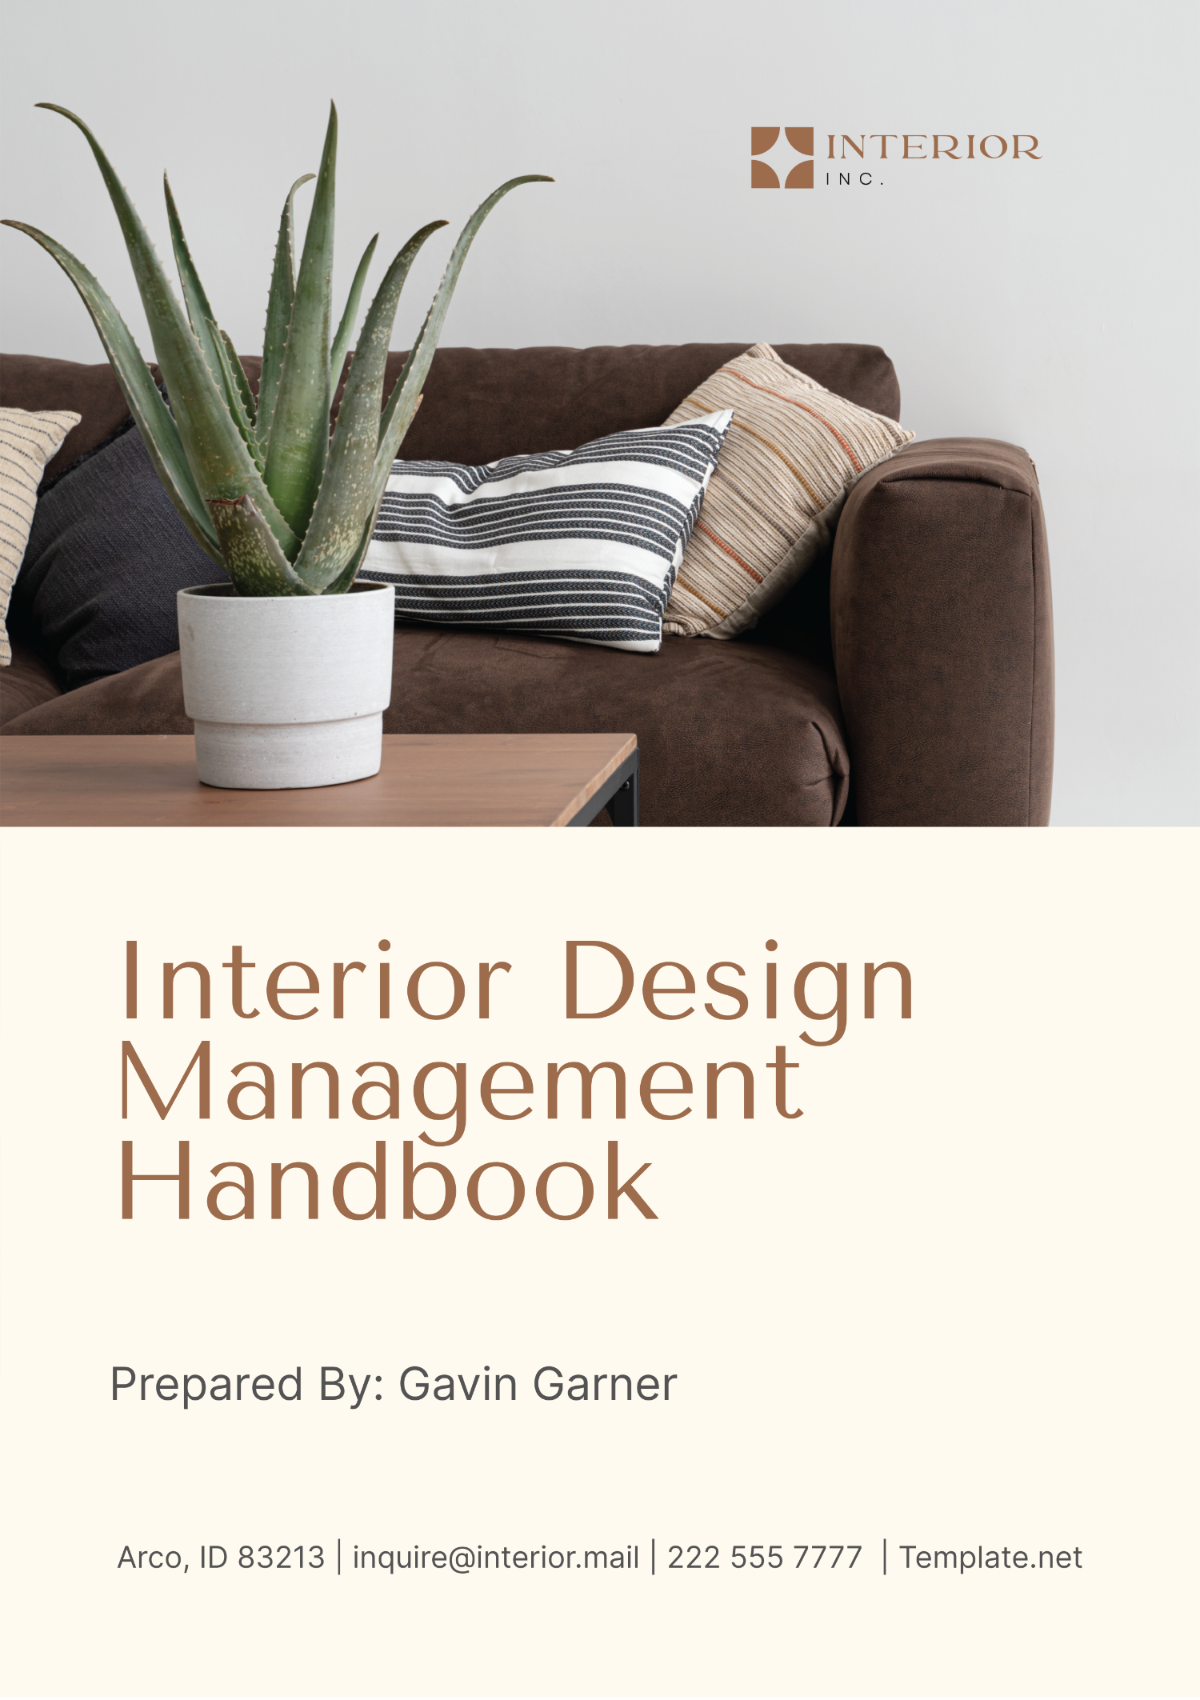 Interior Design Management Handbook Template